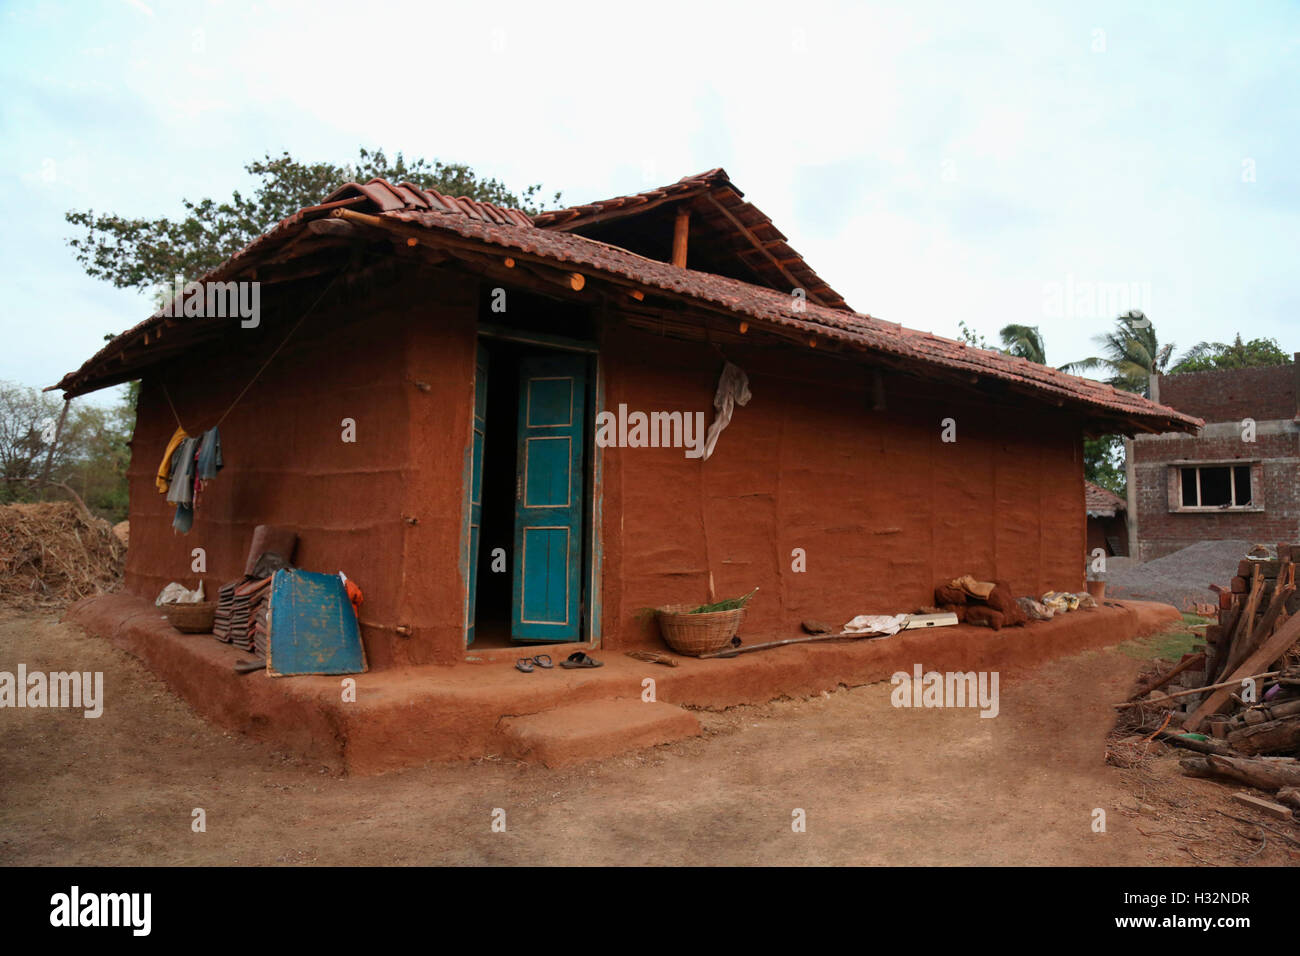 Traditional mud house, CHAUDHARI TRIBE, Kalamkui Village, Gujrat, India Stock Photo